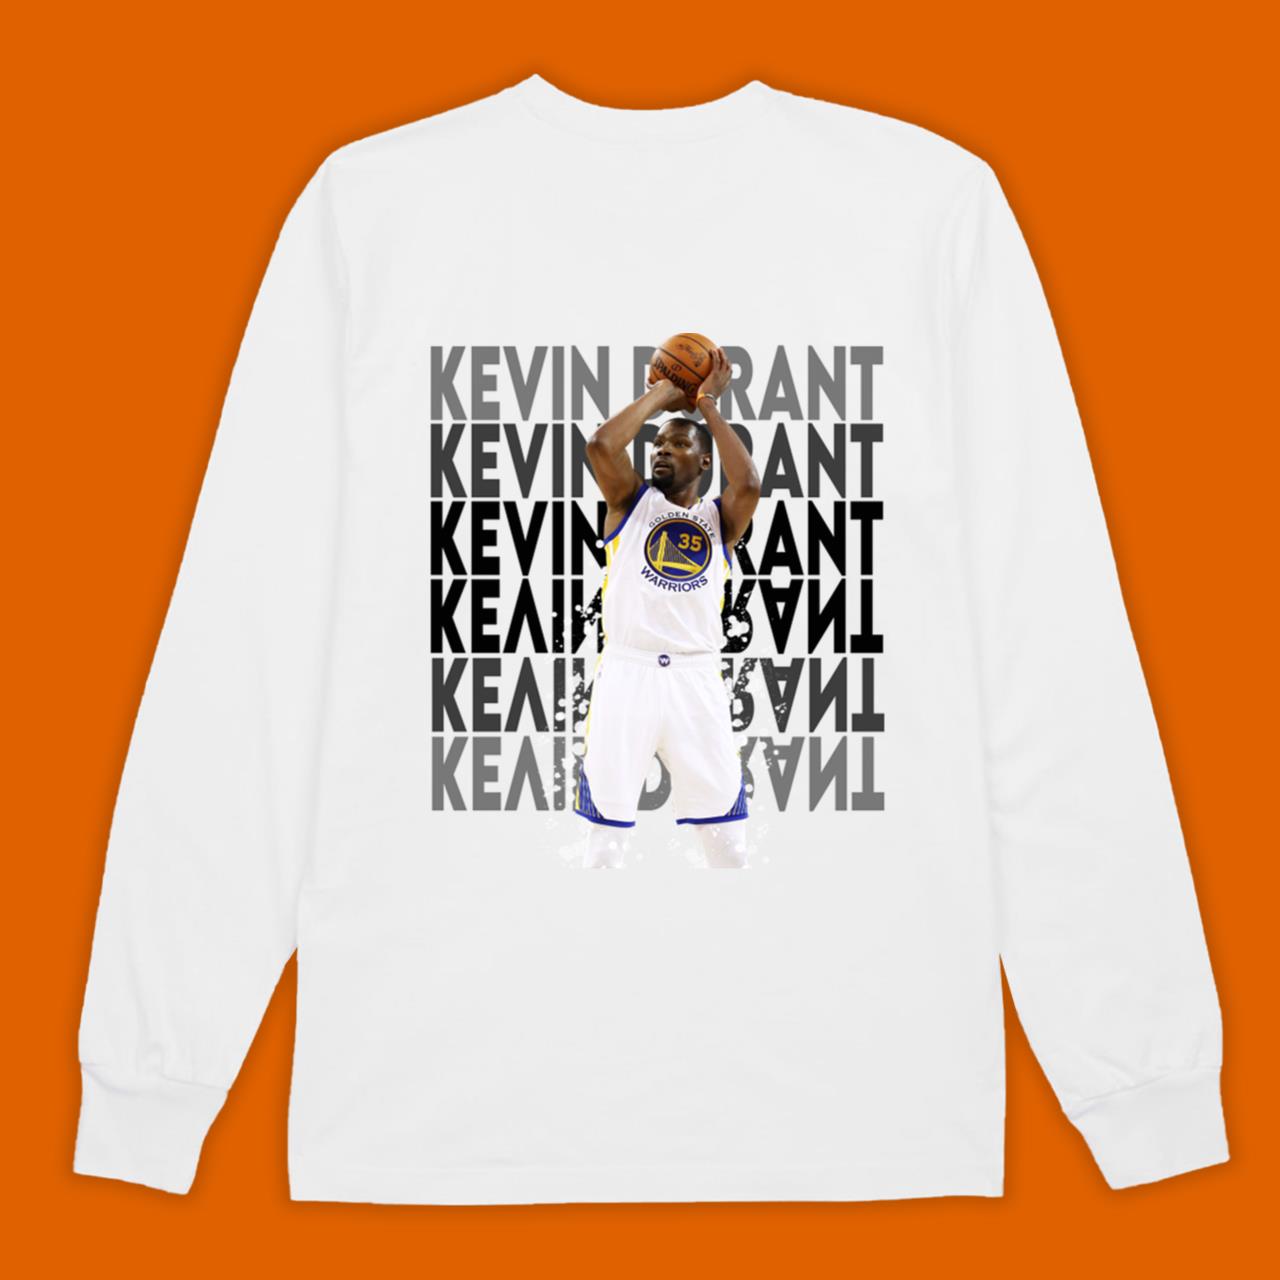 Kevin Durant NBA Player T-Shirt